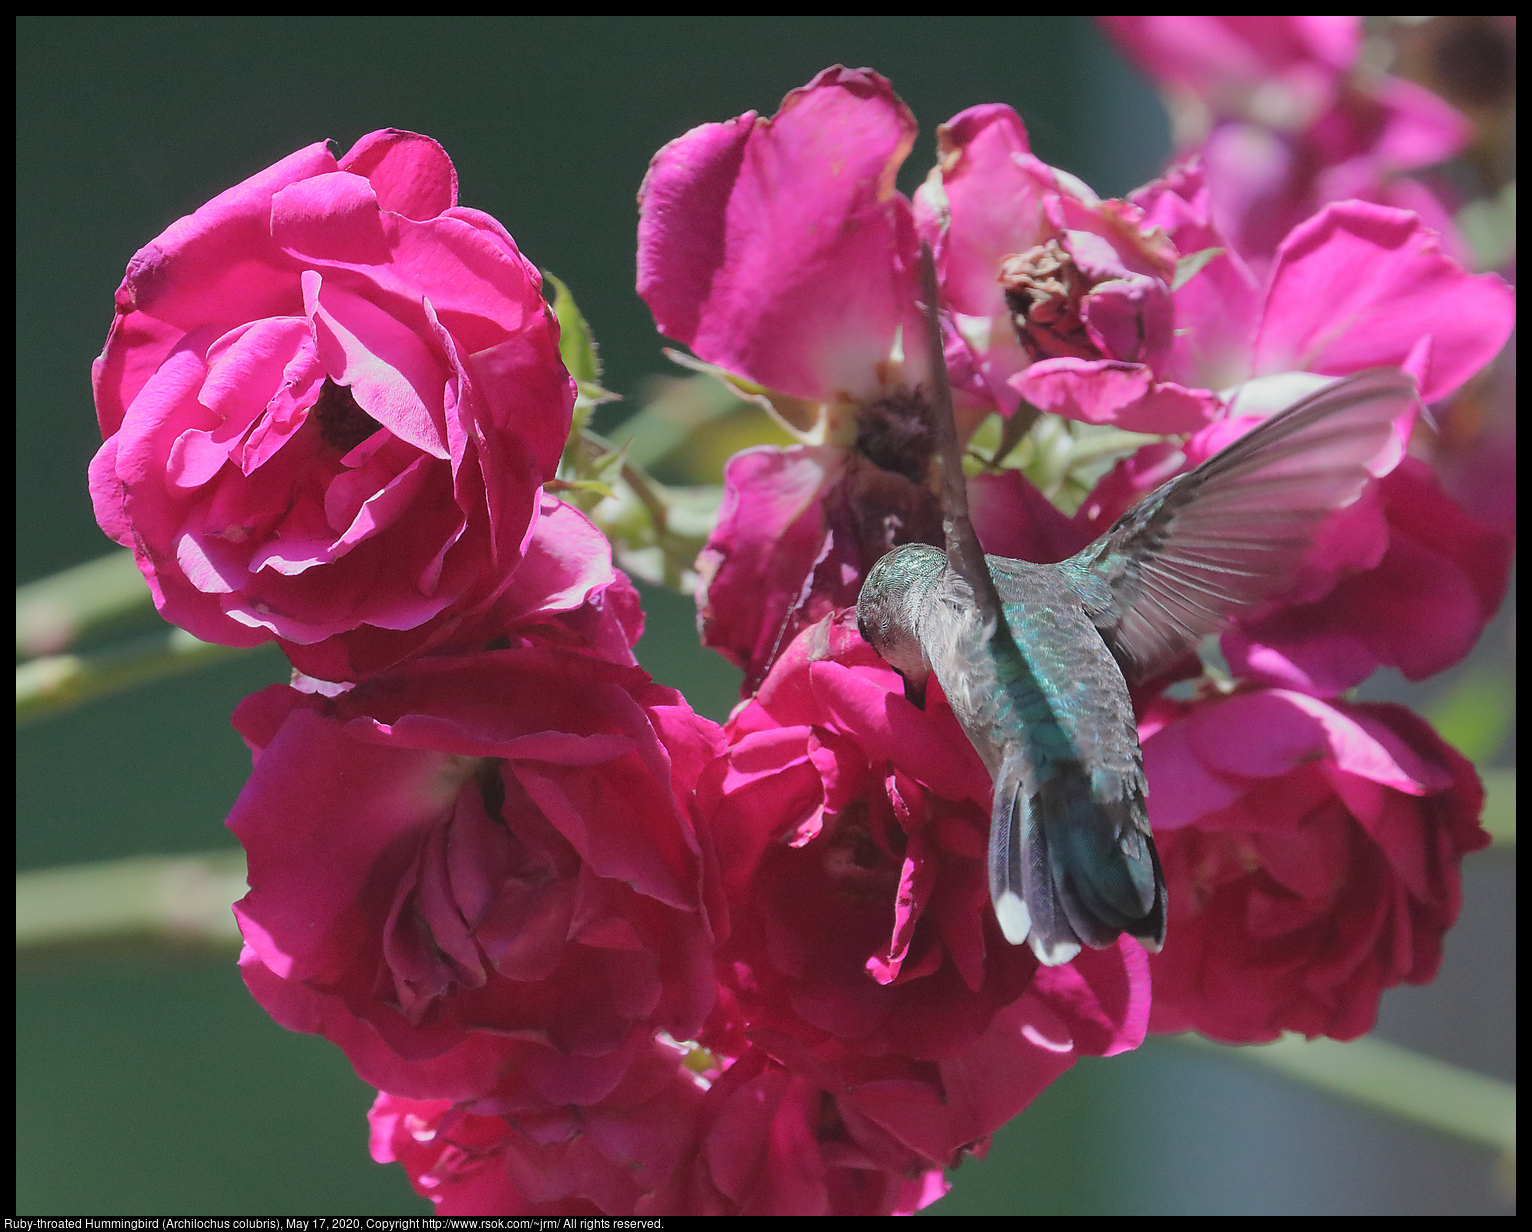 Ruby-throated Hummingbird (Archilochus colubris), May 17, 2020